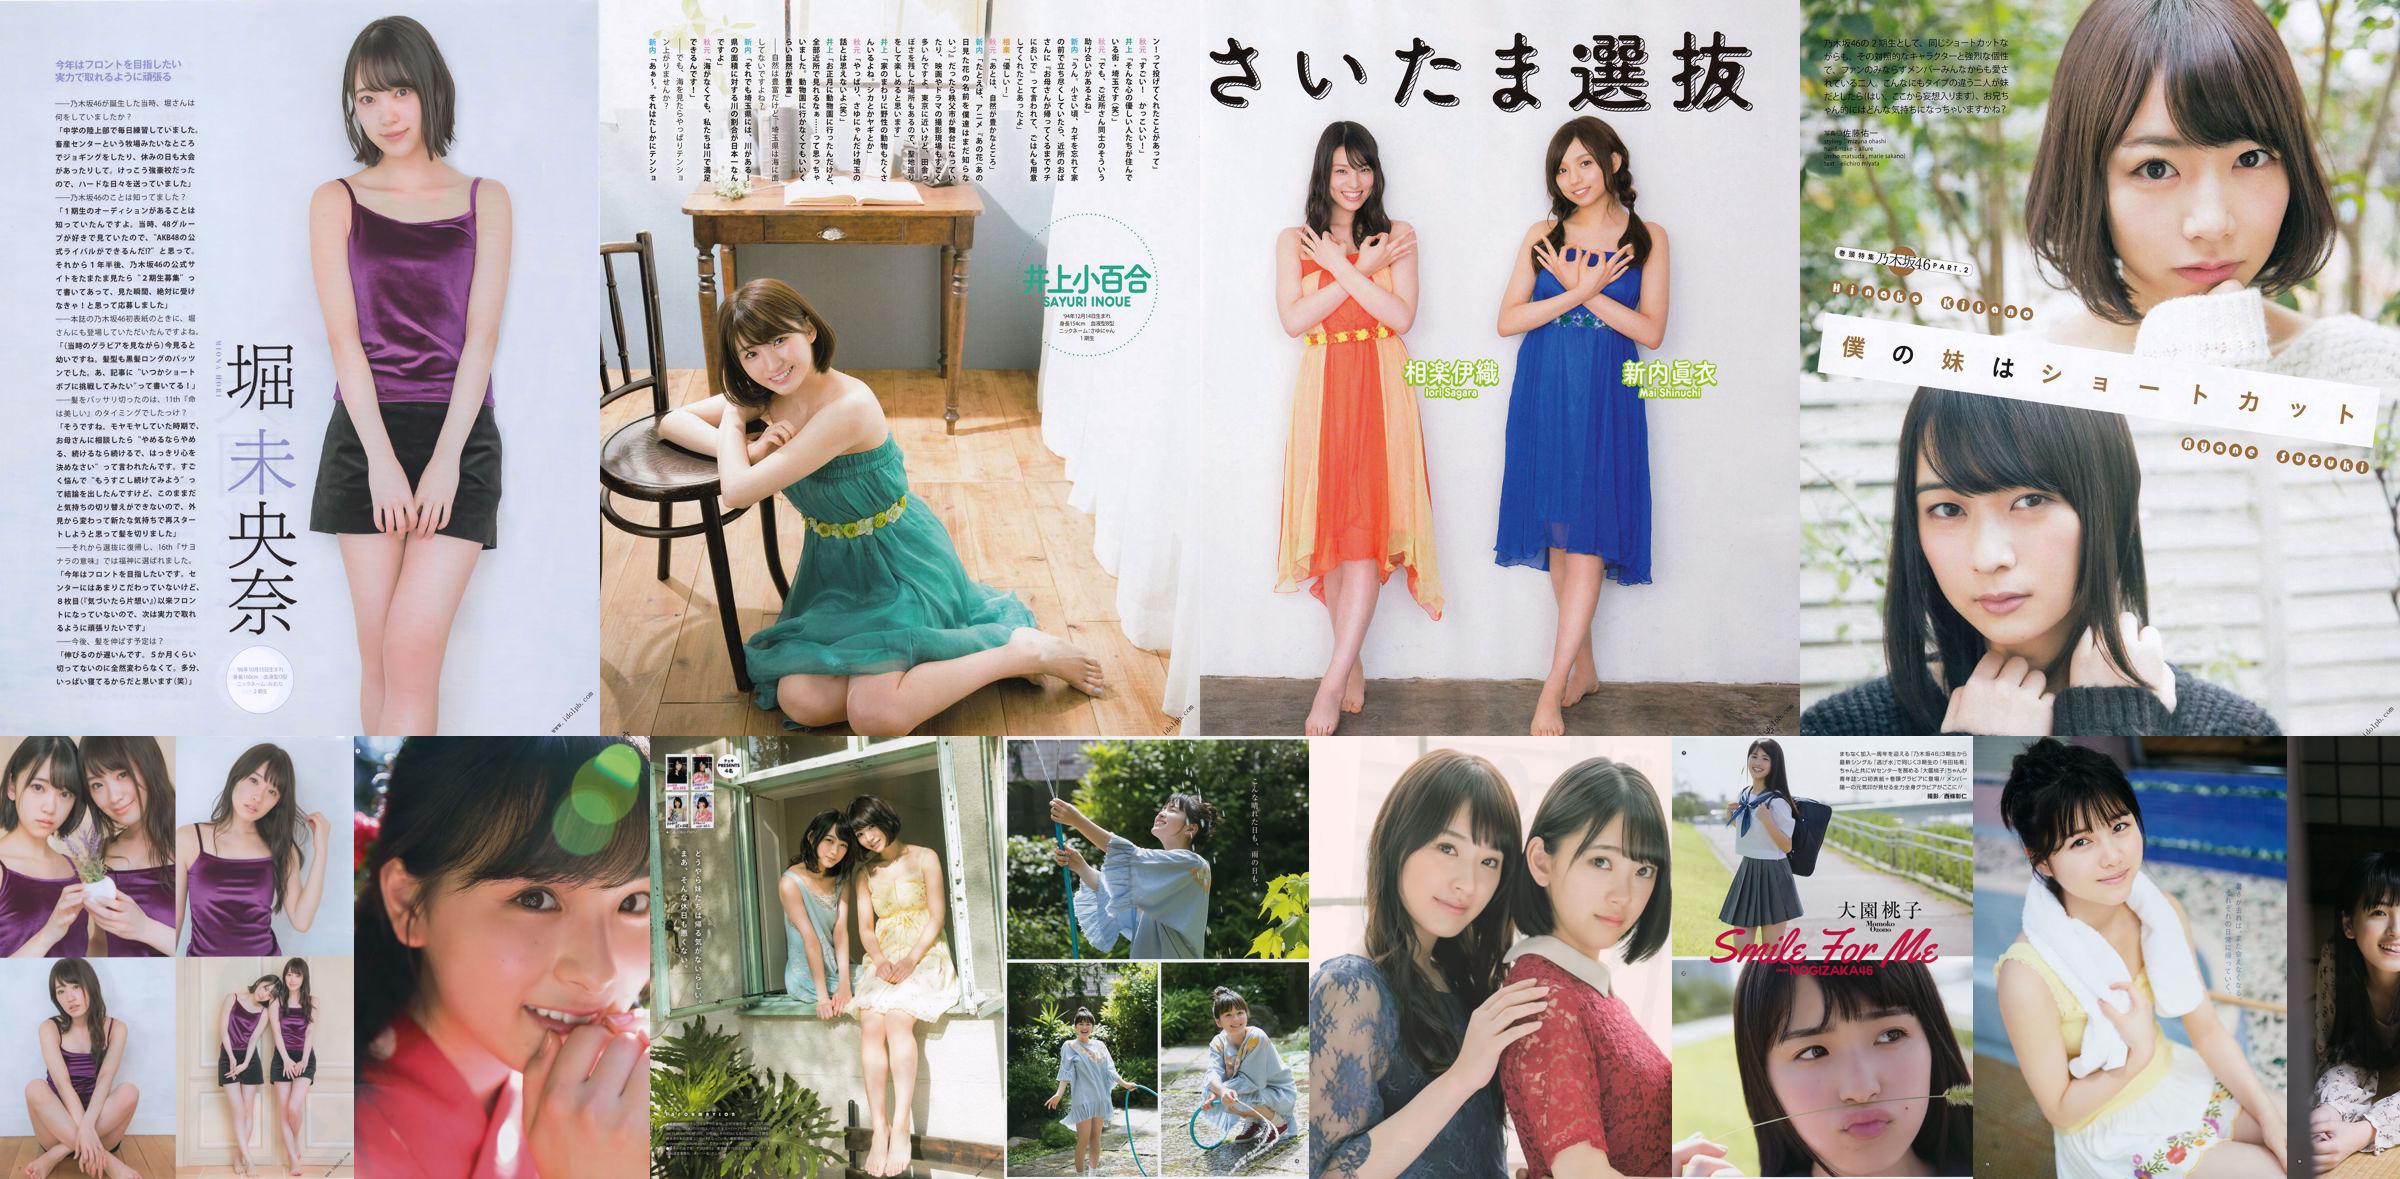 [Young Gangan] Momoko Oen, Sumi Sakaguchi 2018 No.15 Photo Magazine No.7b632d Page 1